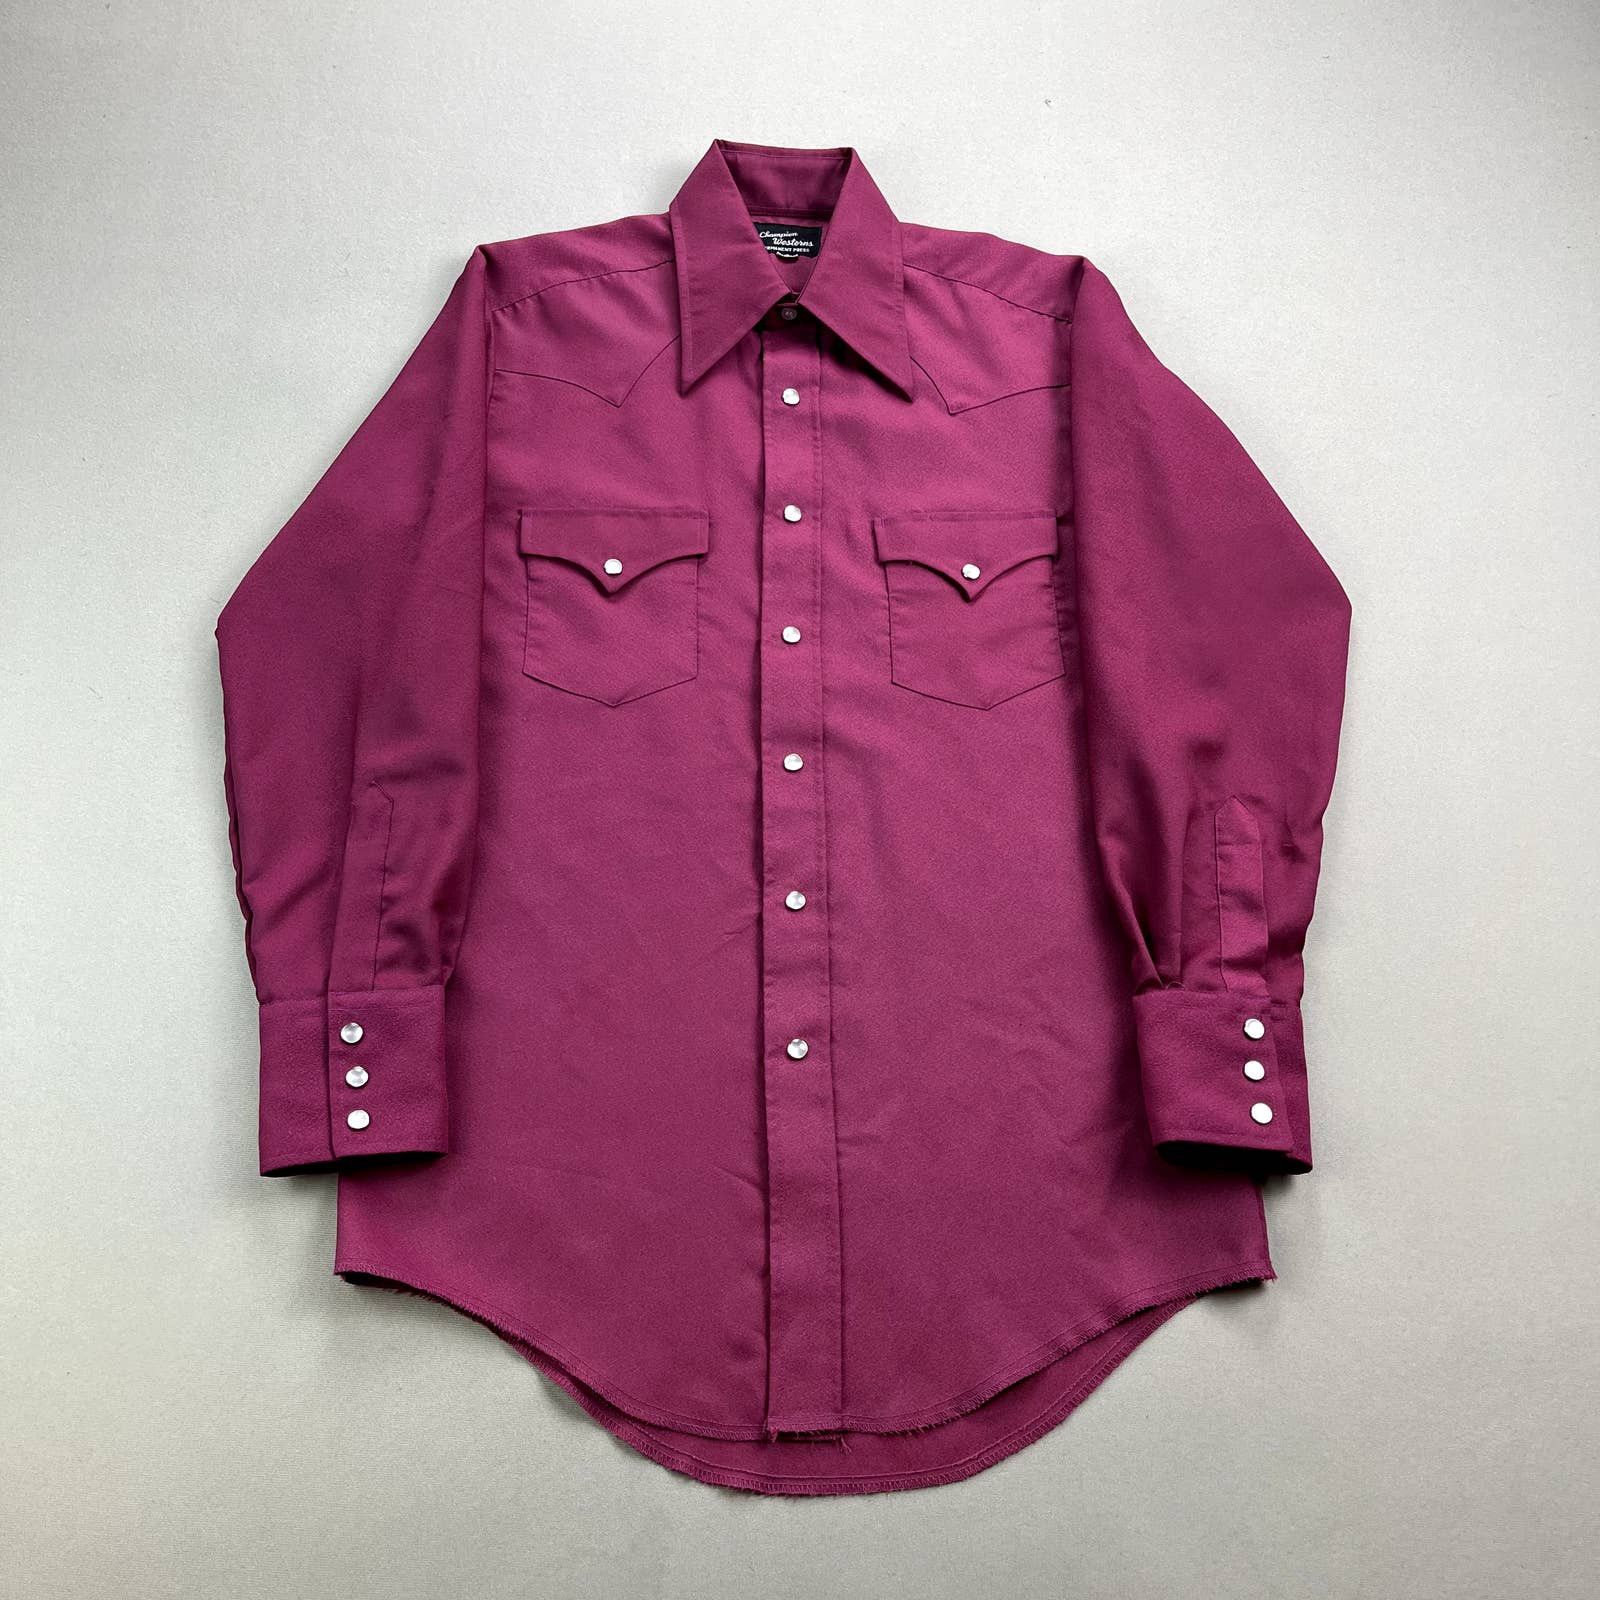 Vintage Vintage Champion Westerns Shirt Medium 15-33 Pink Pearl Snap Size US M / EU 48-50 / 2 - 1 Preview